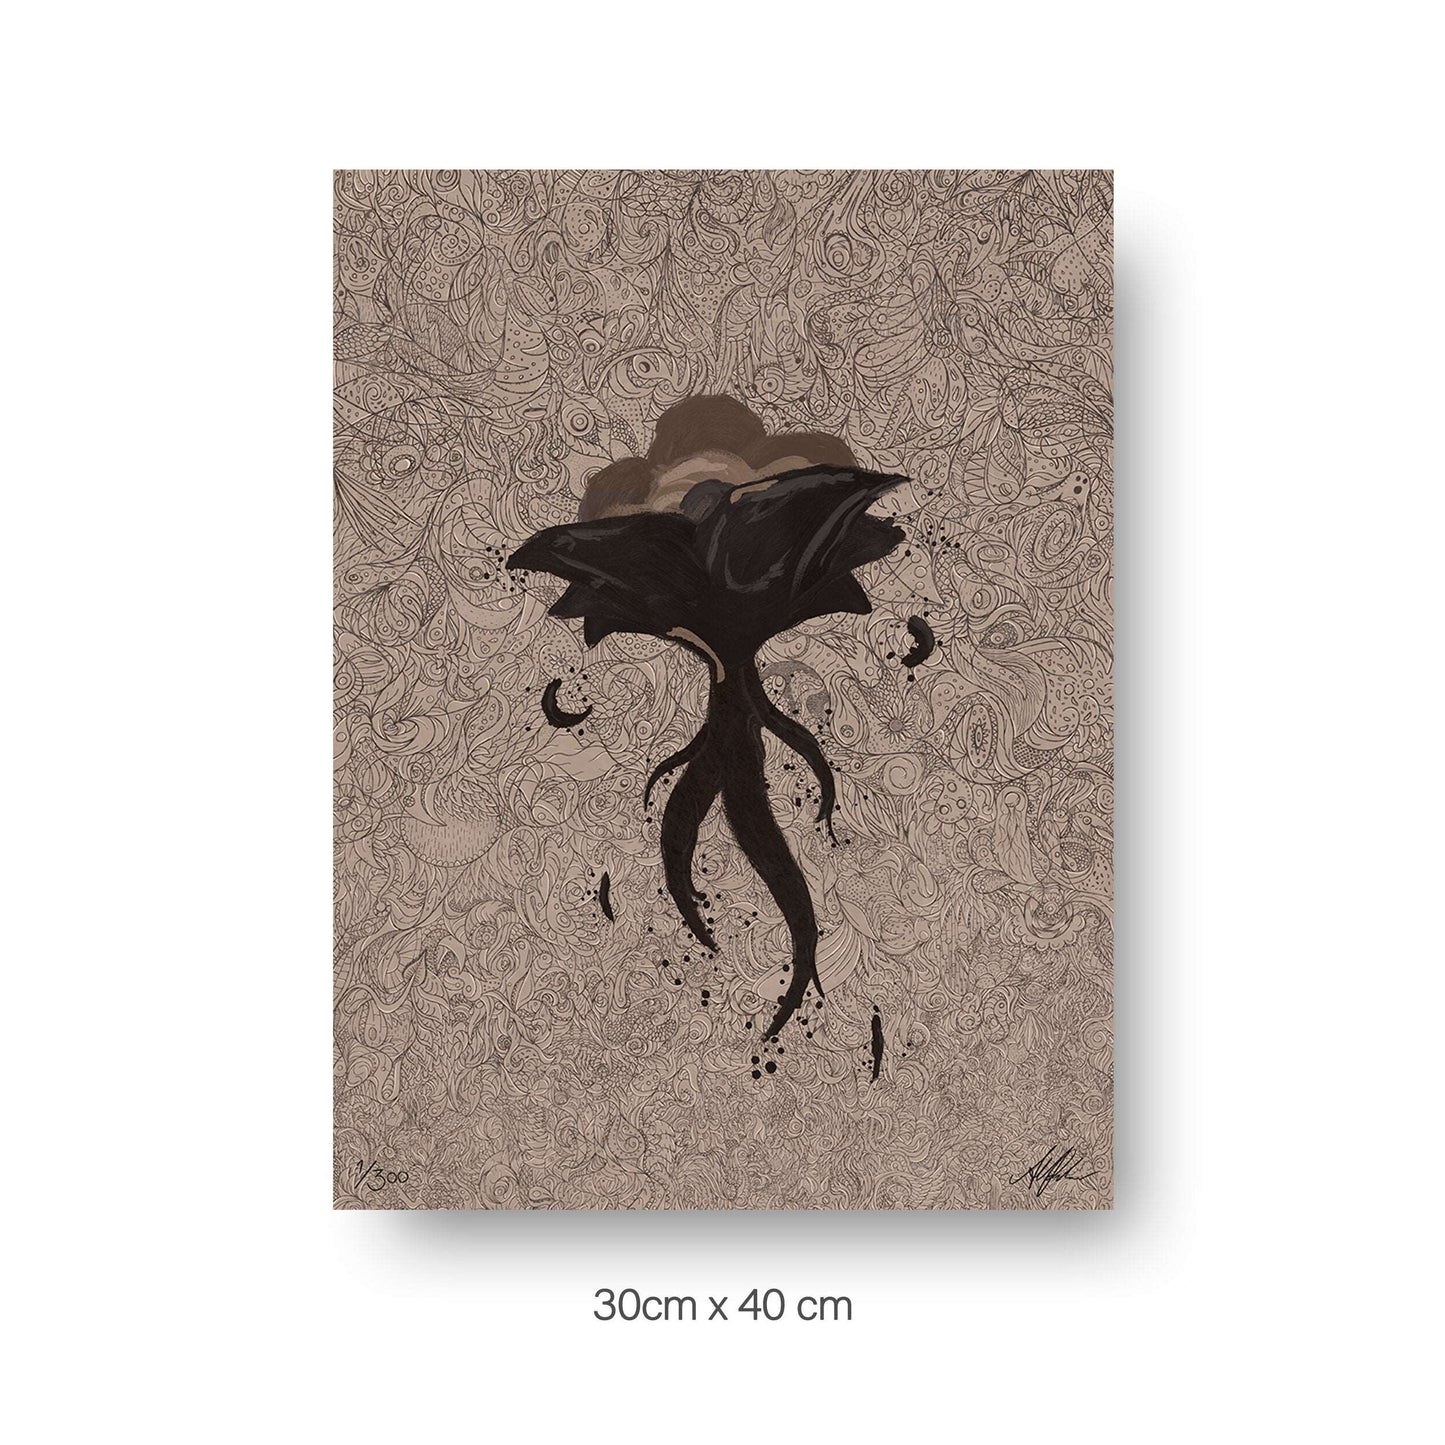 NOKUKO - art - Alan Pedersen - ALANTHEROCK - Limited edition - Grow - listen to you  - Flowering Hazel -  30cm x 40cm print